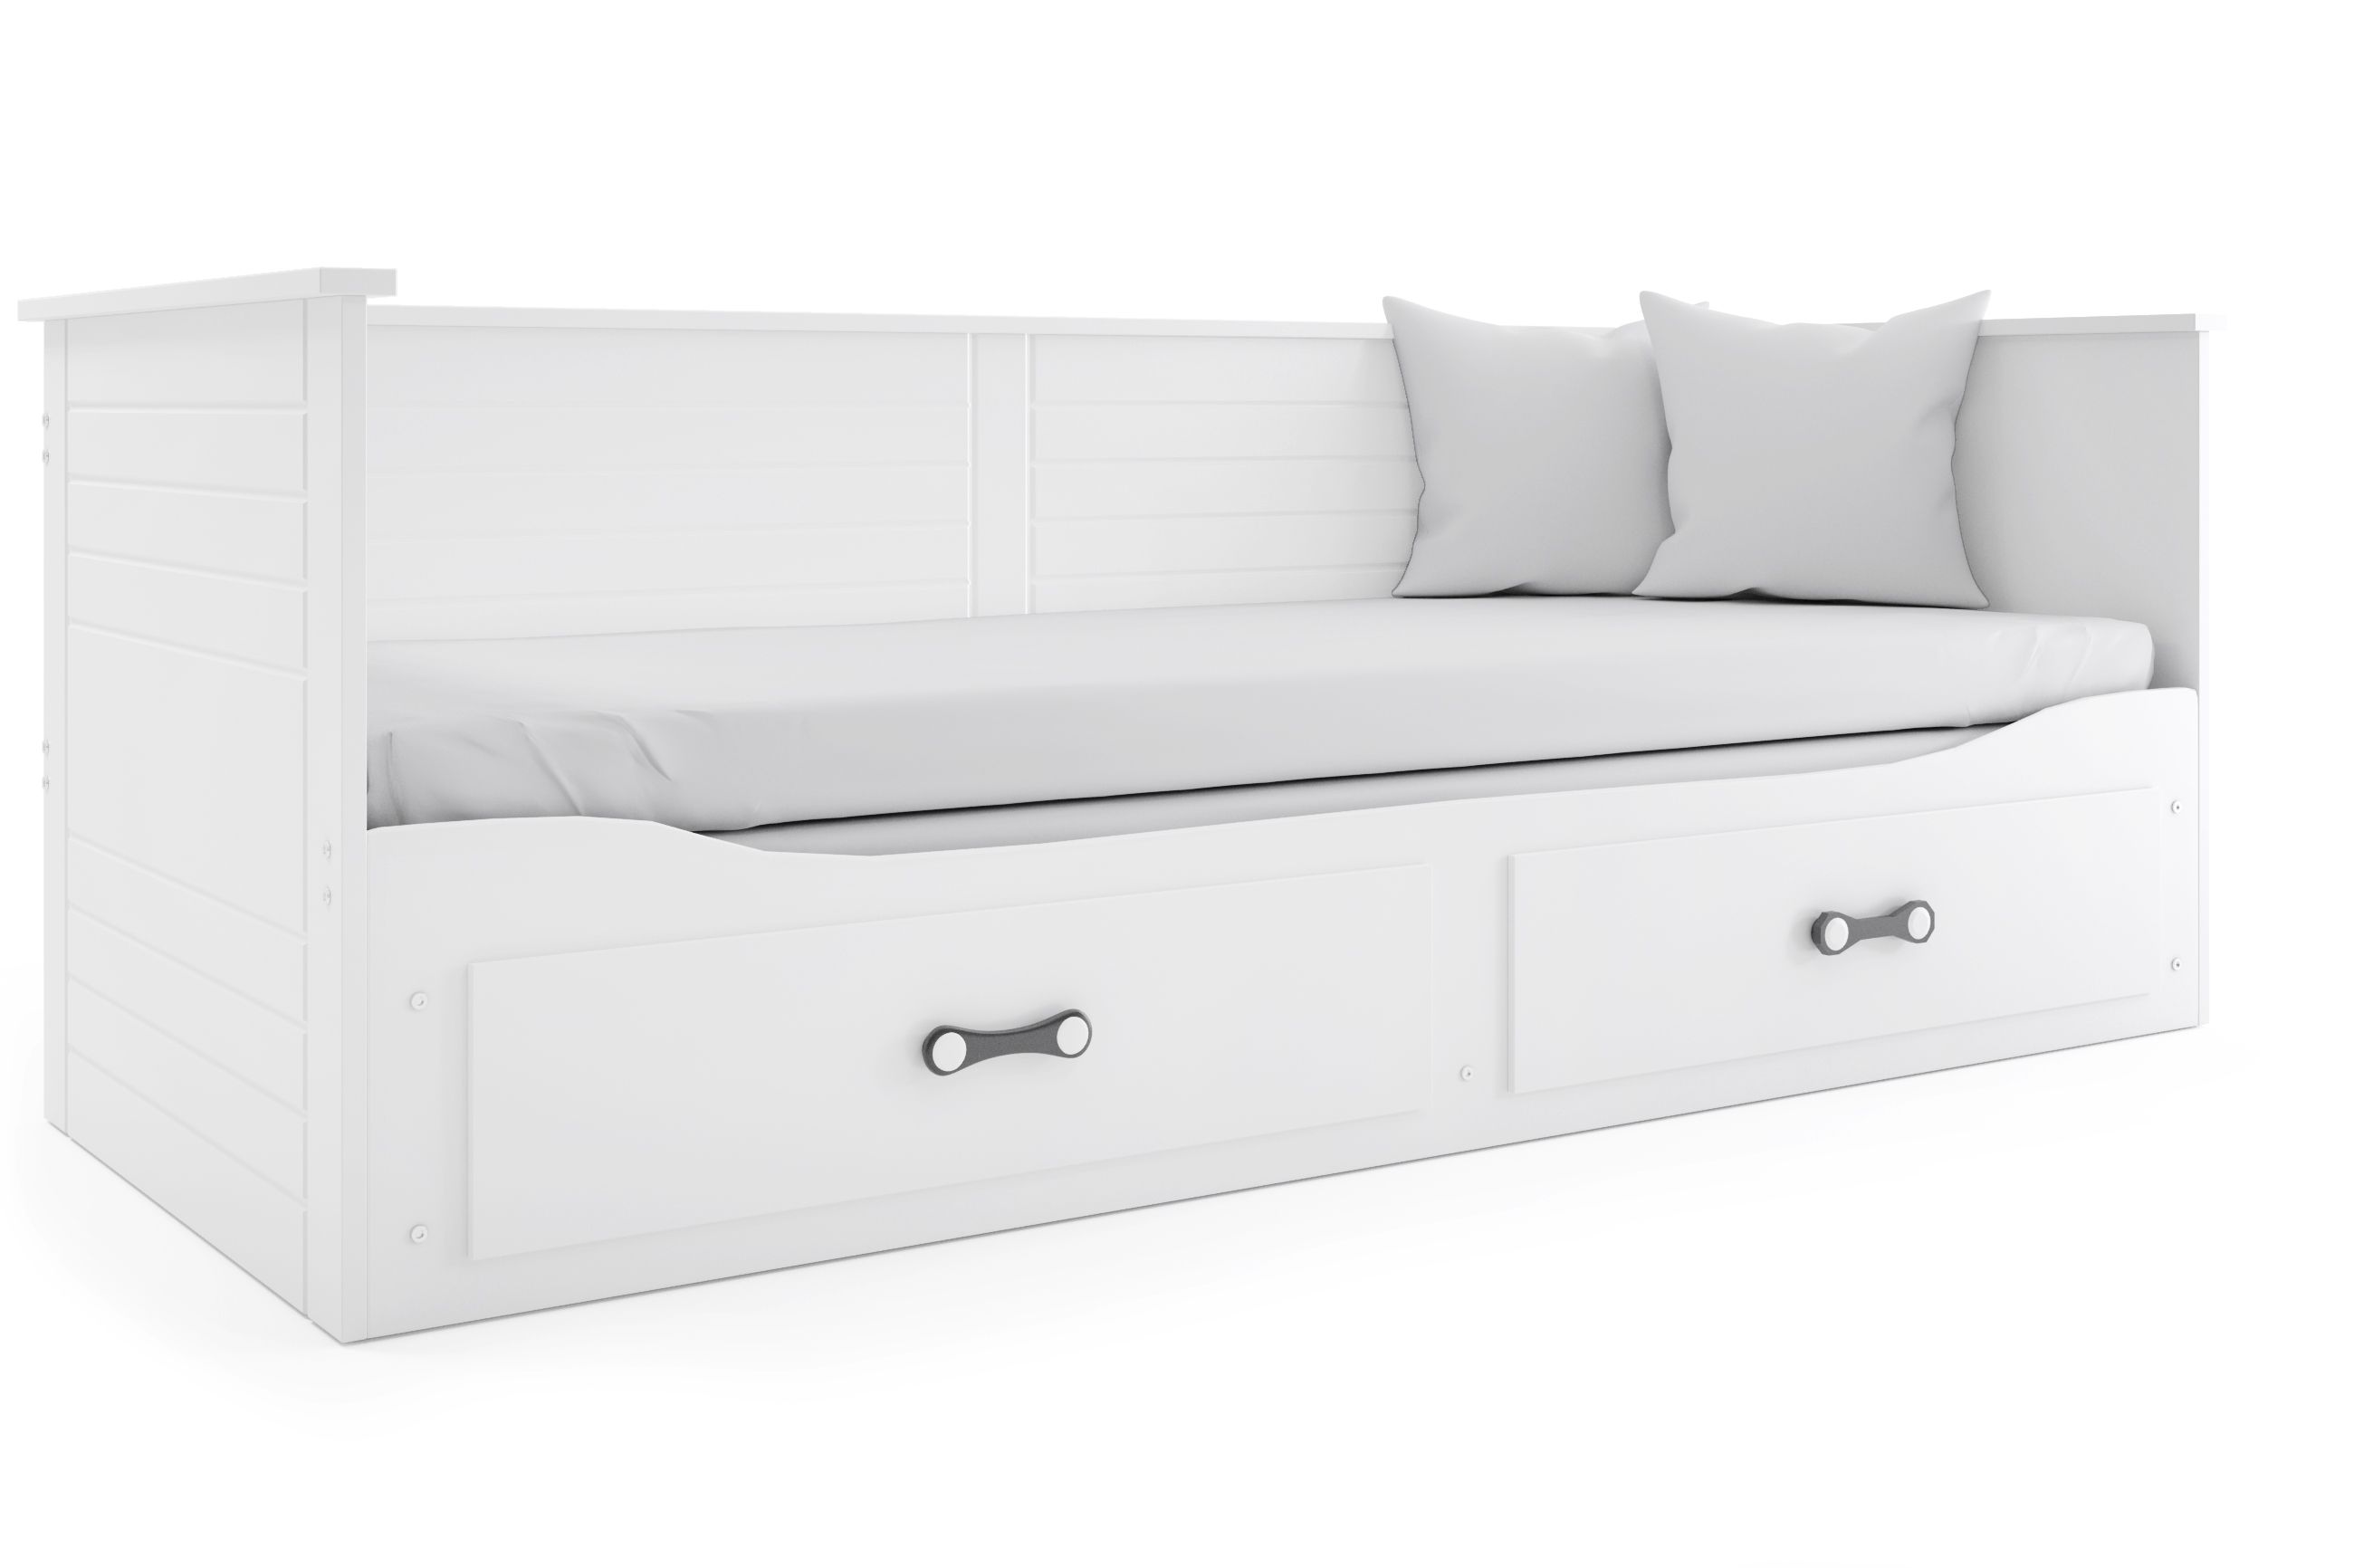 Rozkladacia posteľ HERMES 200x80cm BIELA